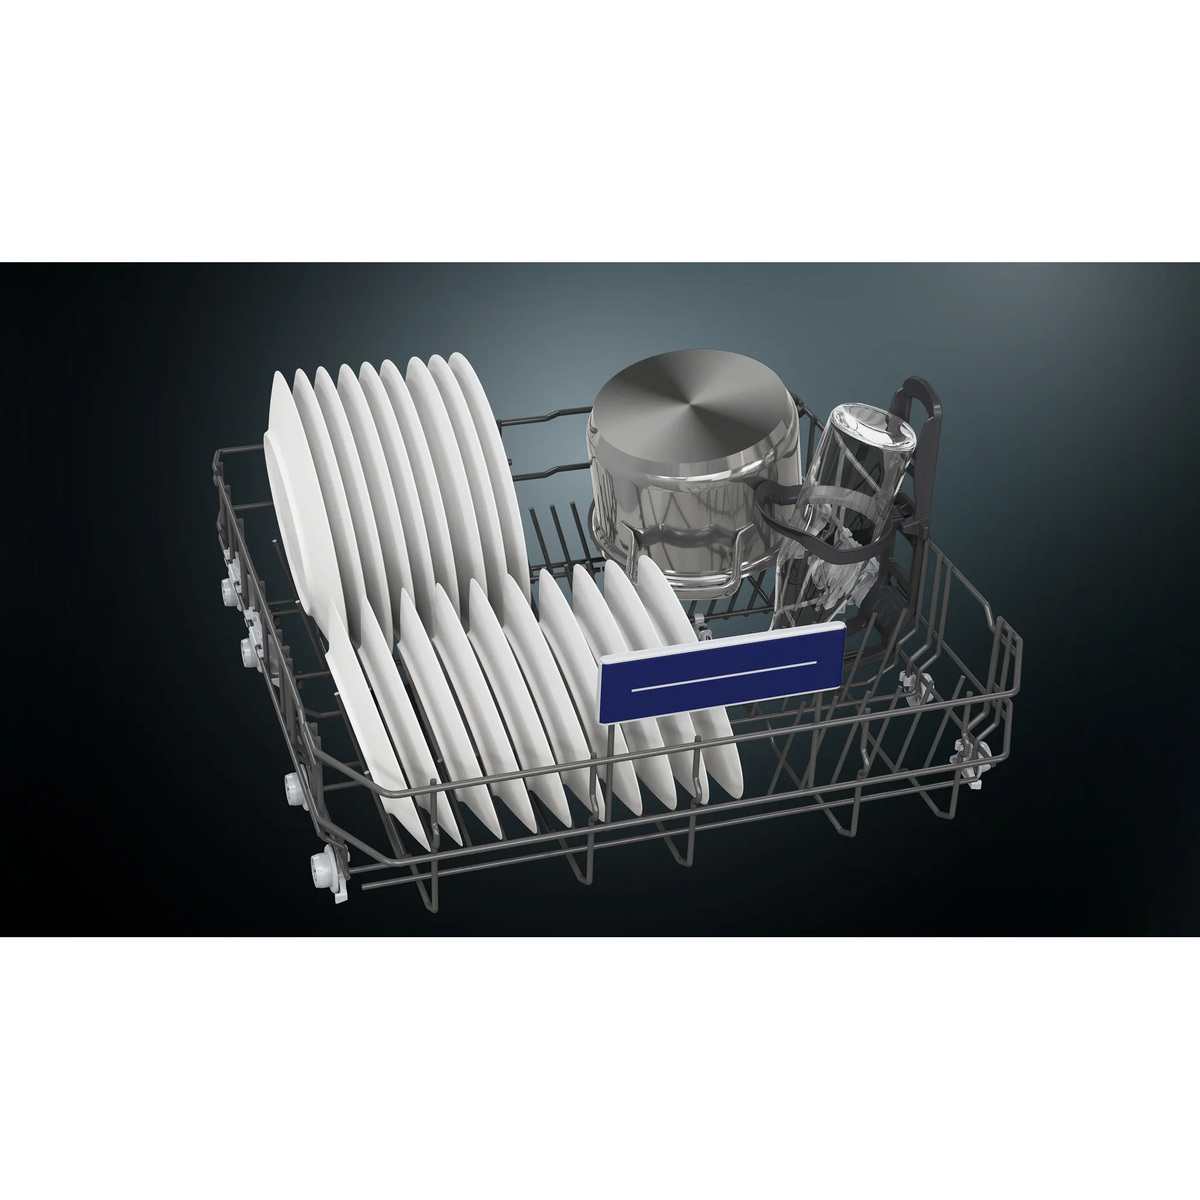 Siemens iQ300 Free-Standing Dishwasher, 60 cm, 6 Washing Programs, Black Inox, SN23HC65MM